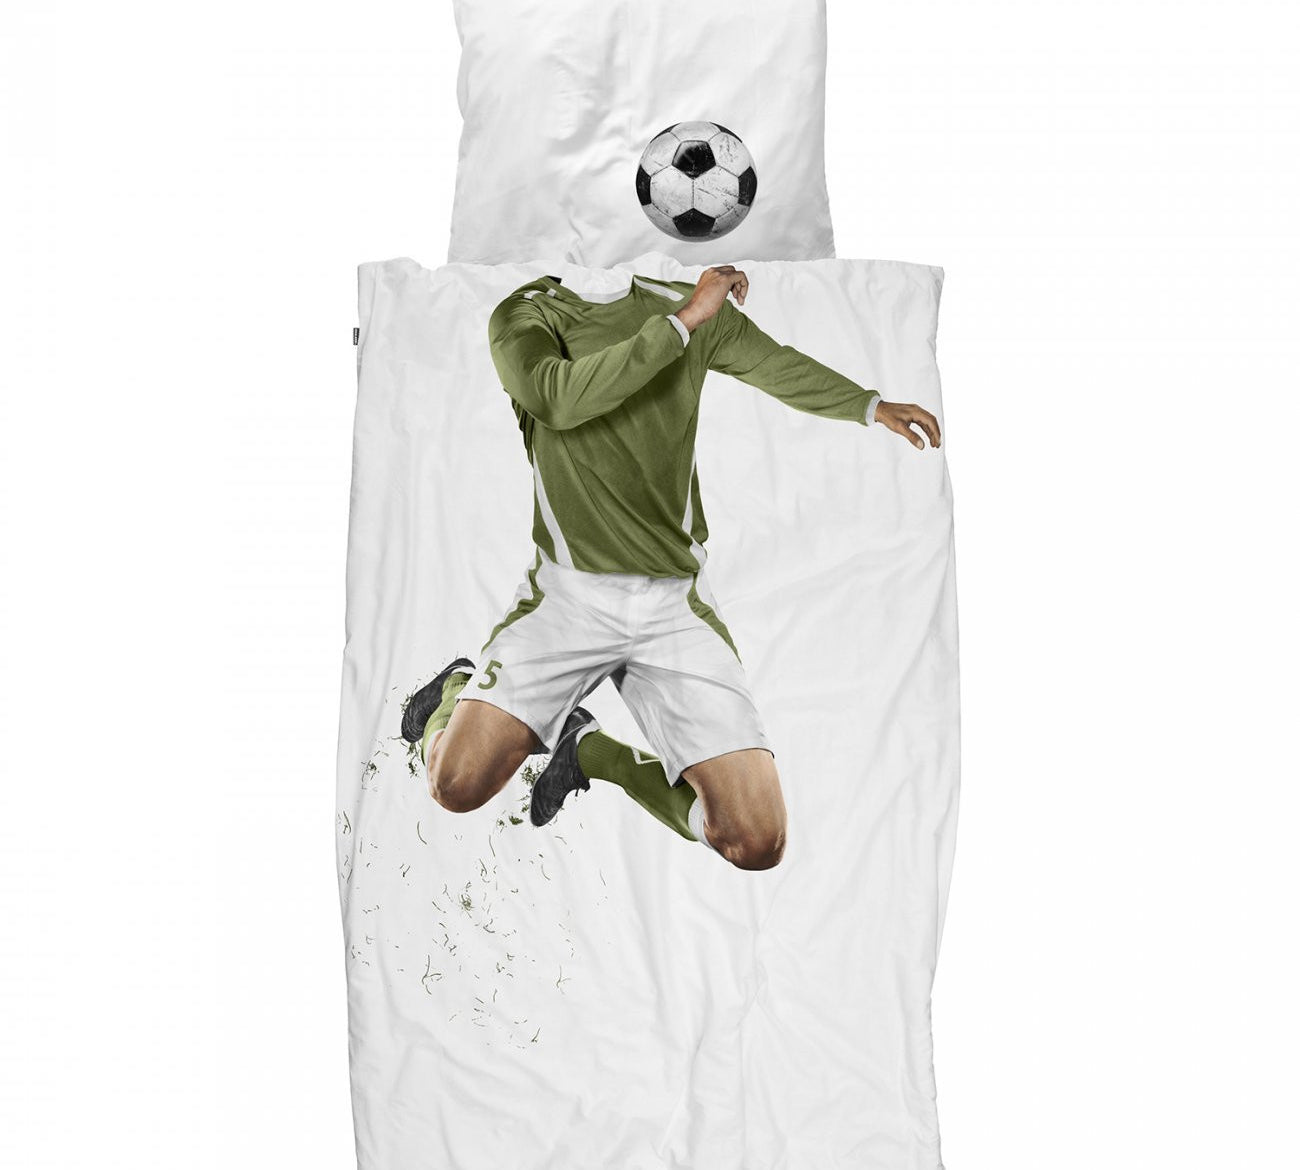 deer industries kids bedding snurk soccer player green single size cotton